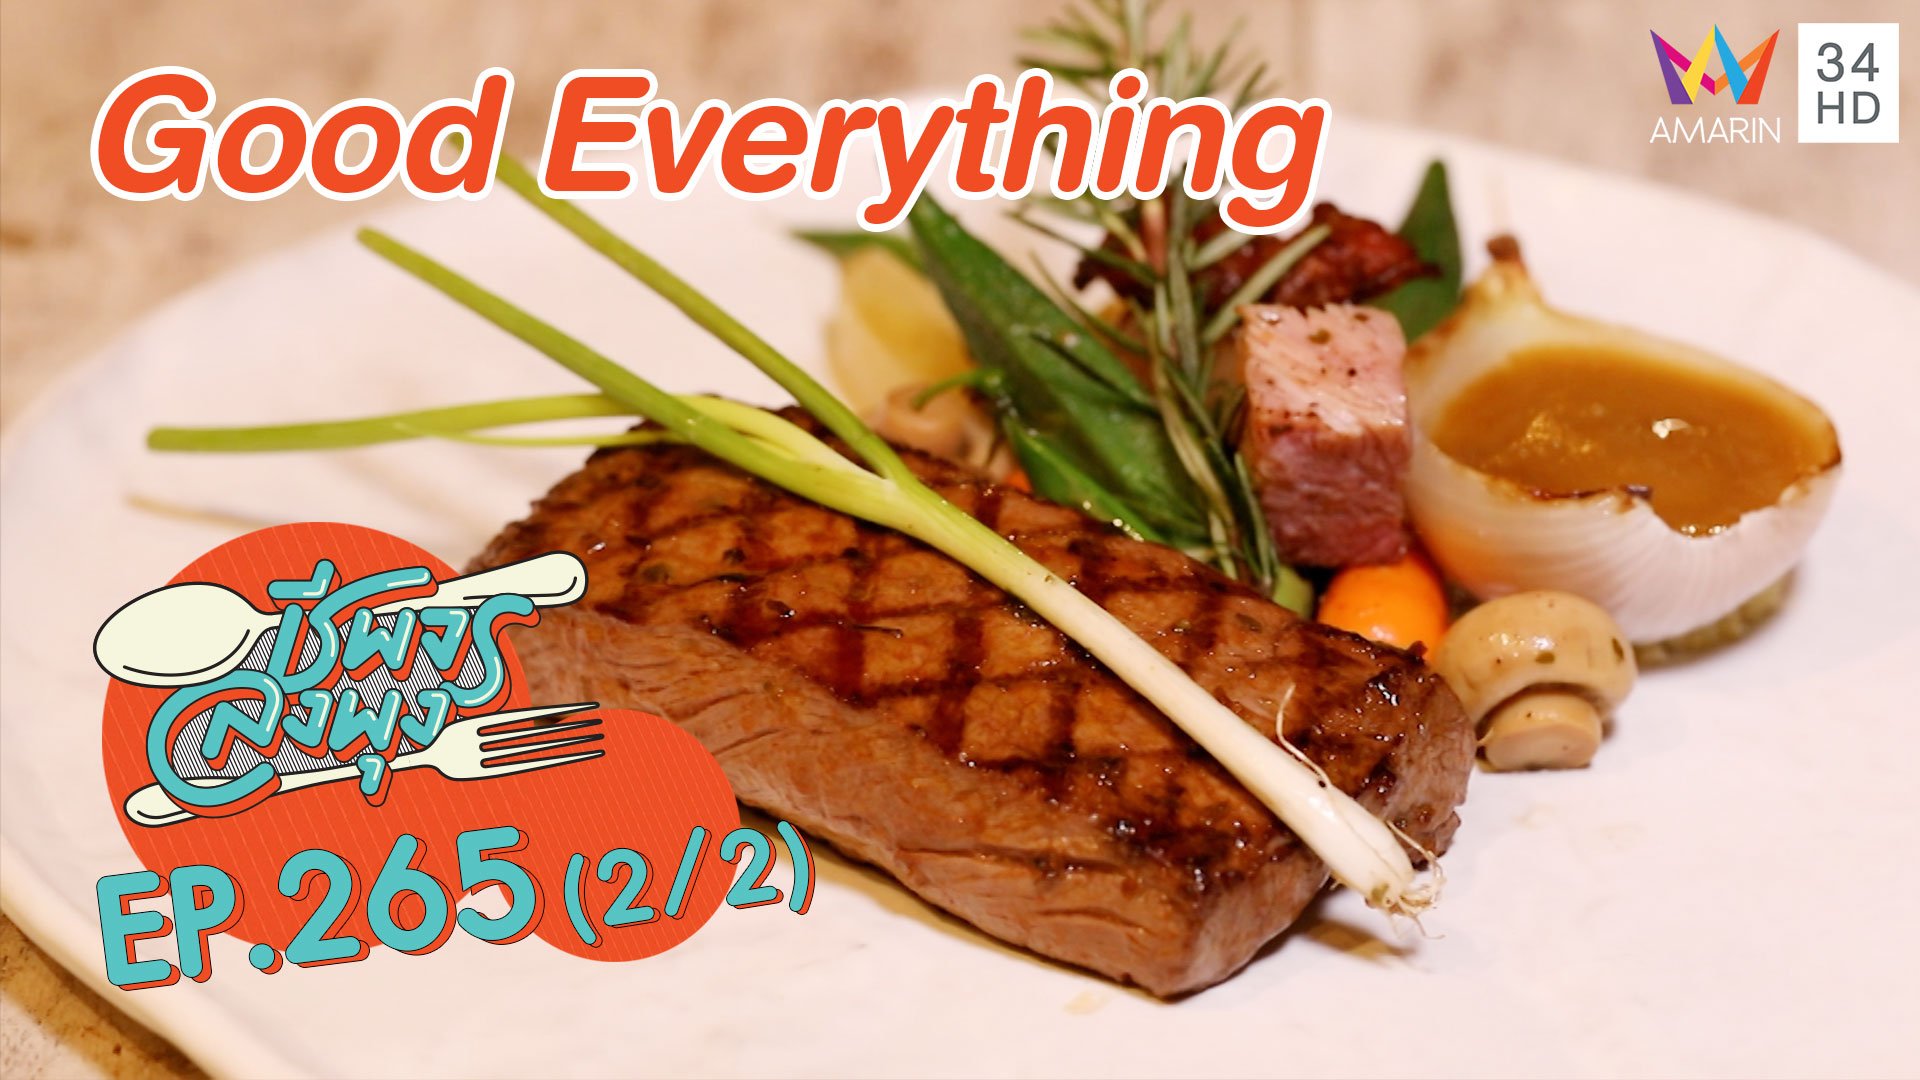 'Good Everything' อาหารดีบรรยากาศสุดเลิศ | ชีพจรลงพุง | 20 ธ.ค. 63 (2/2) | AMARIN TVHD34